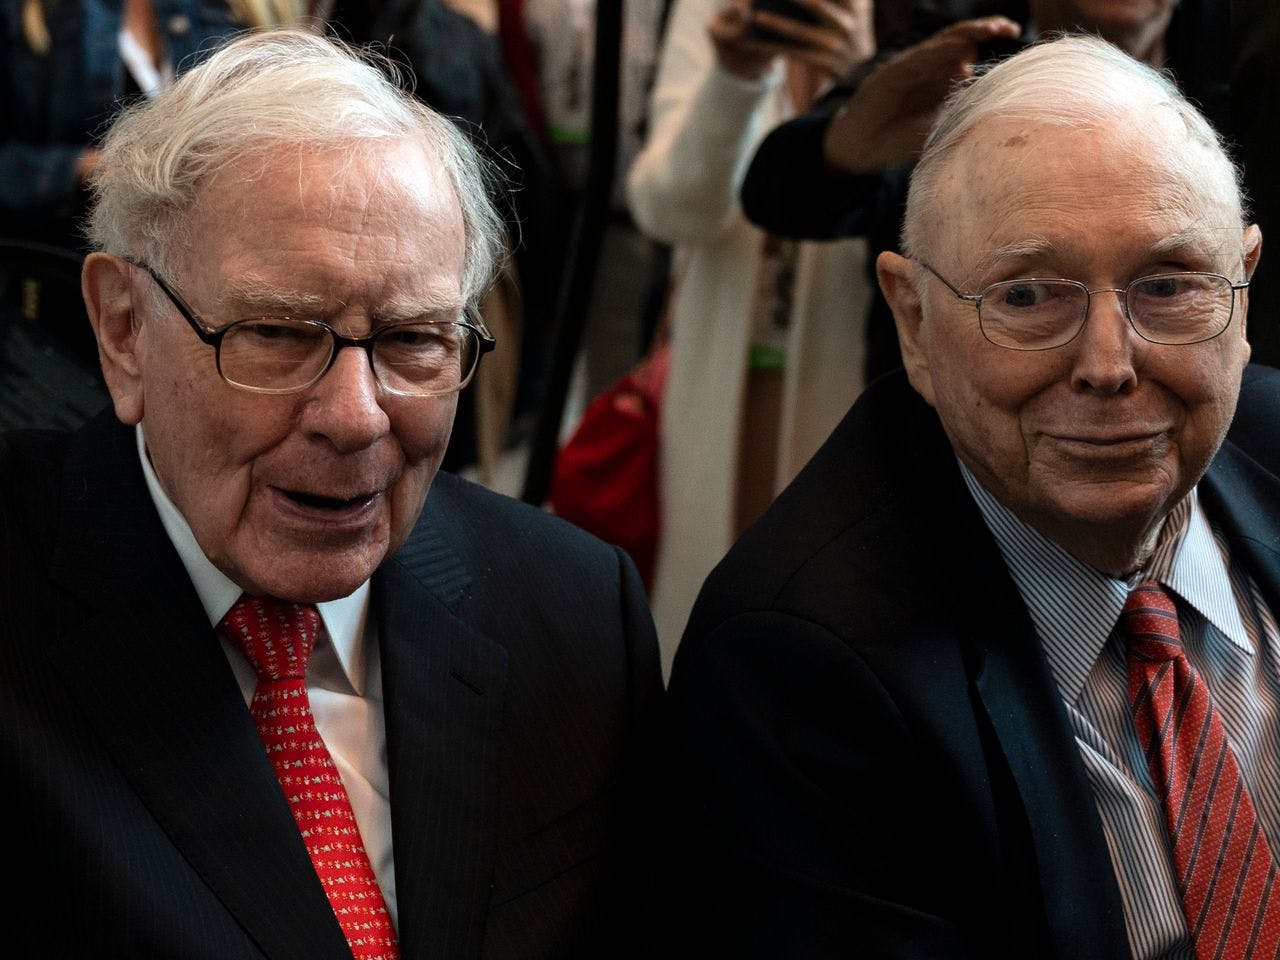 Warren Buffett (left) and Charlie Munger (right) — https://images.mktw.net/im-461638?width=1280&size=1.33333333